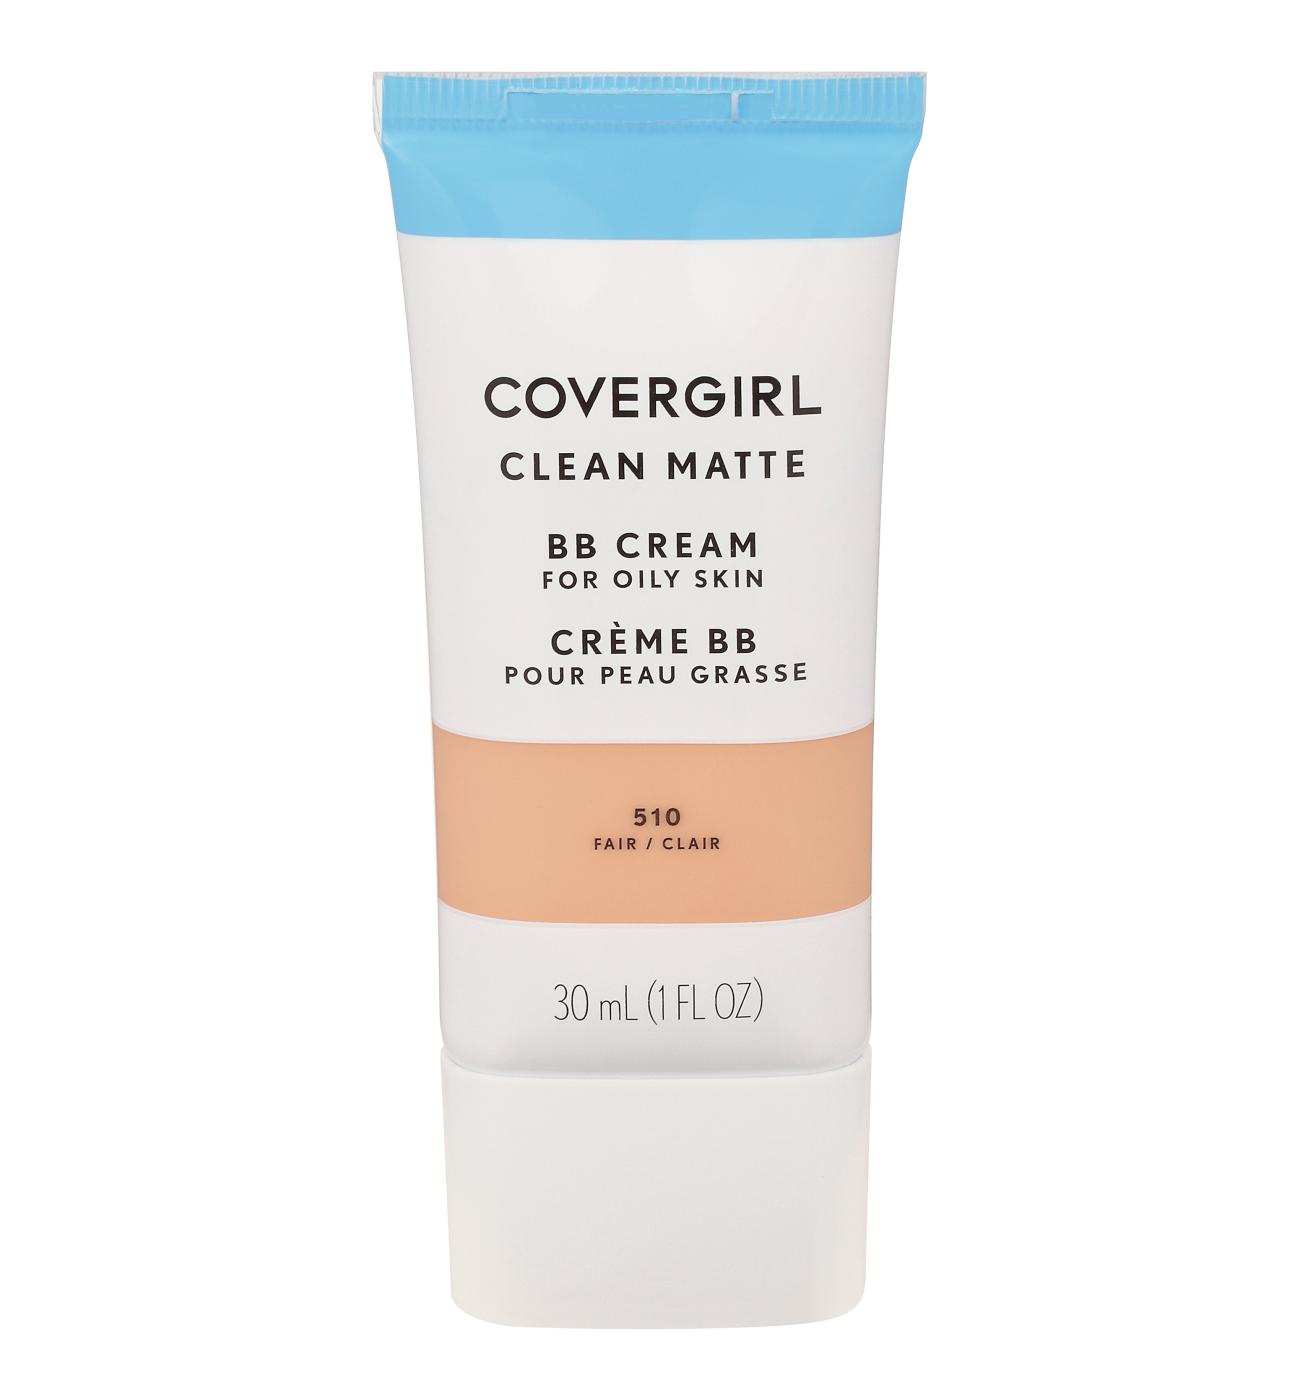 Covergirl Clean Matte BB Cream 510 Fair; image 1 of 6